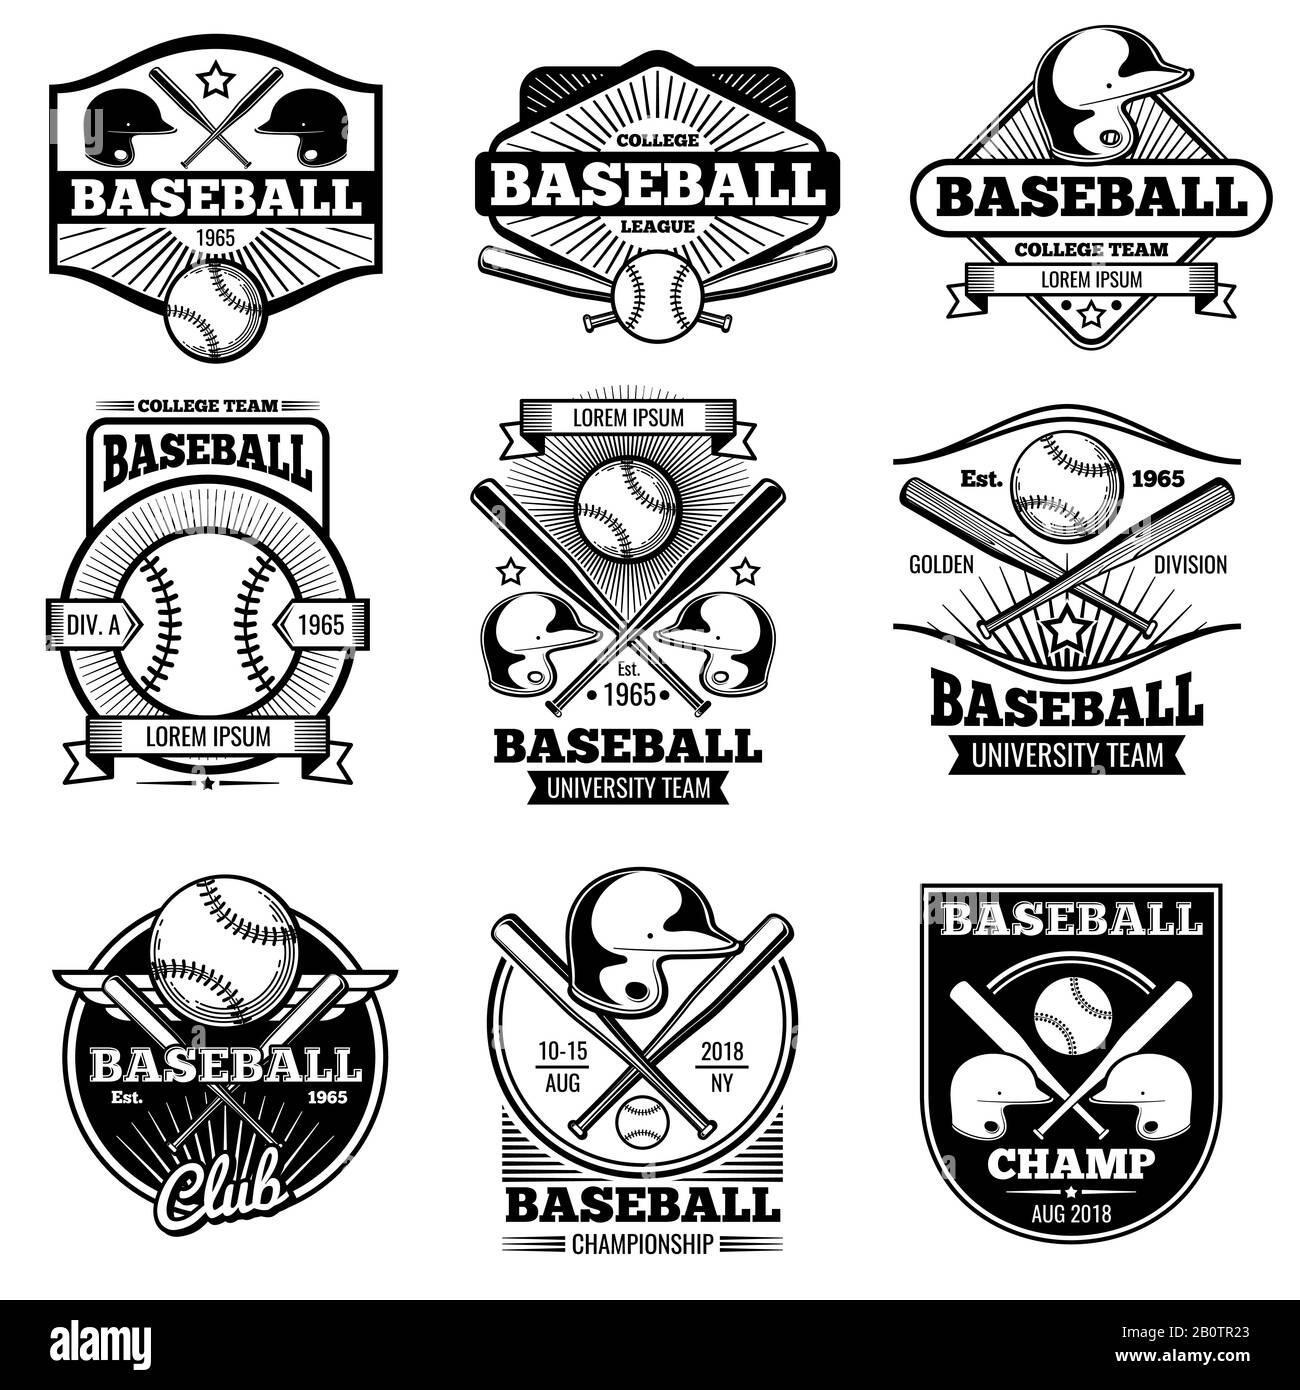 Vintage sports logo design. Retro baseball vector label and badges. Emblem baseball illustration, game logo with ball and bat Stock Vector